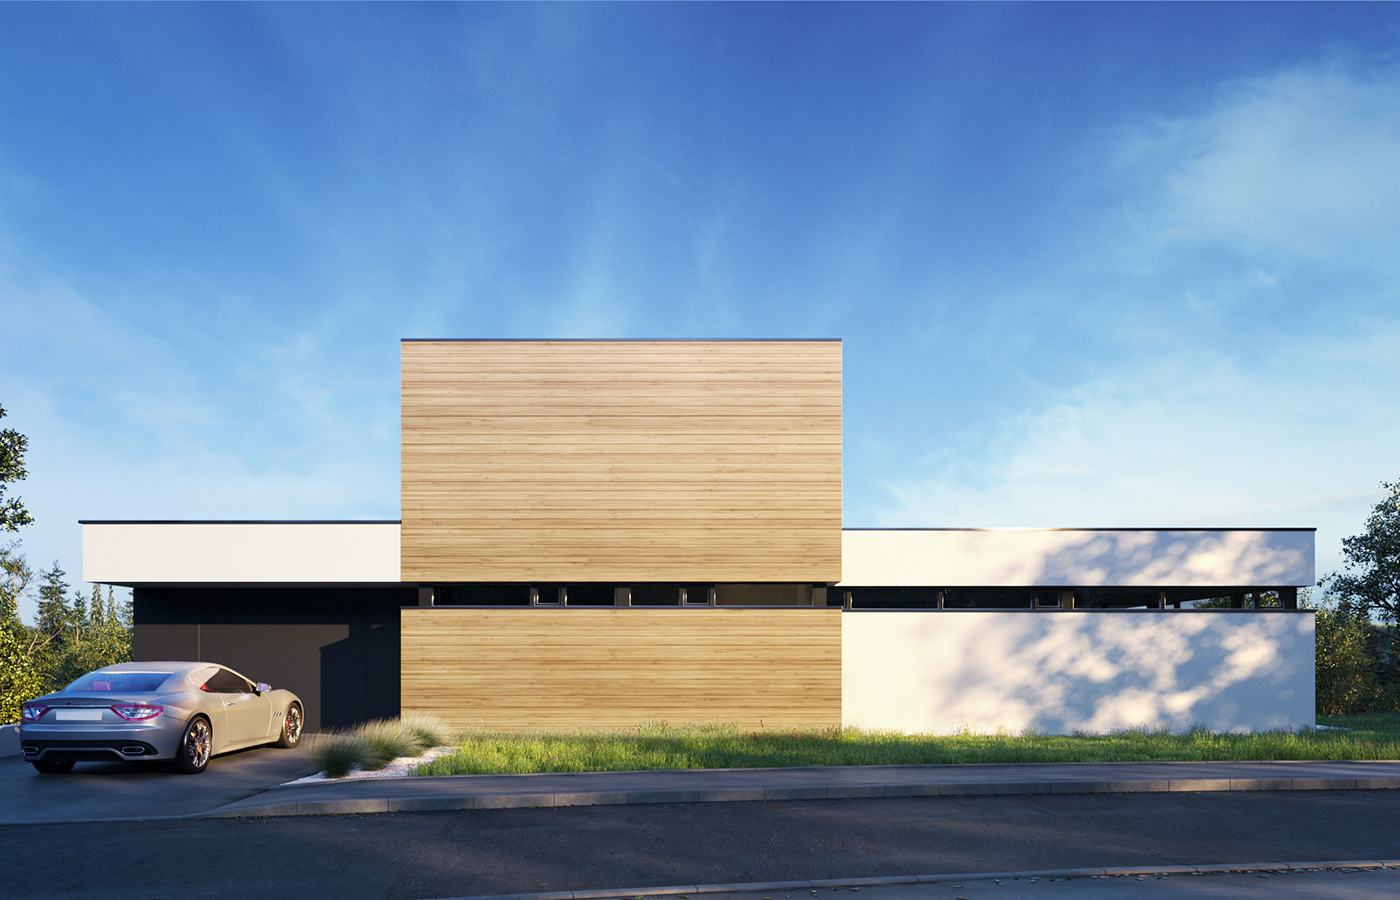 Render architecture house modern view minimalist visualisation graphic exterior photorealistic